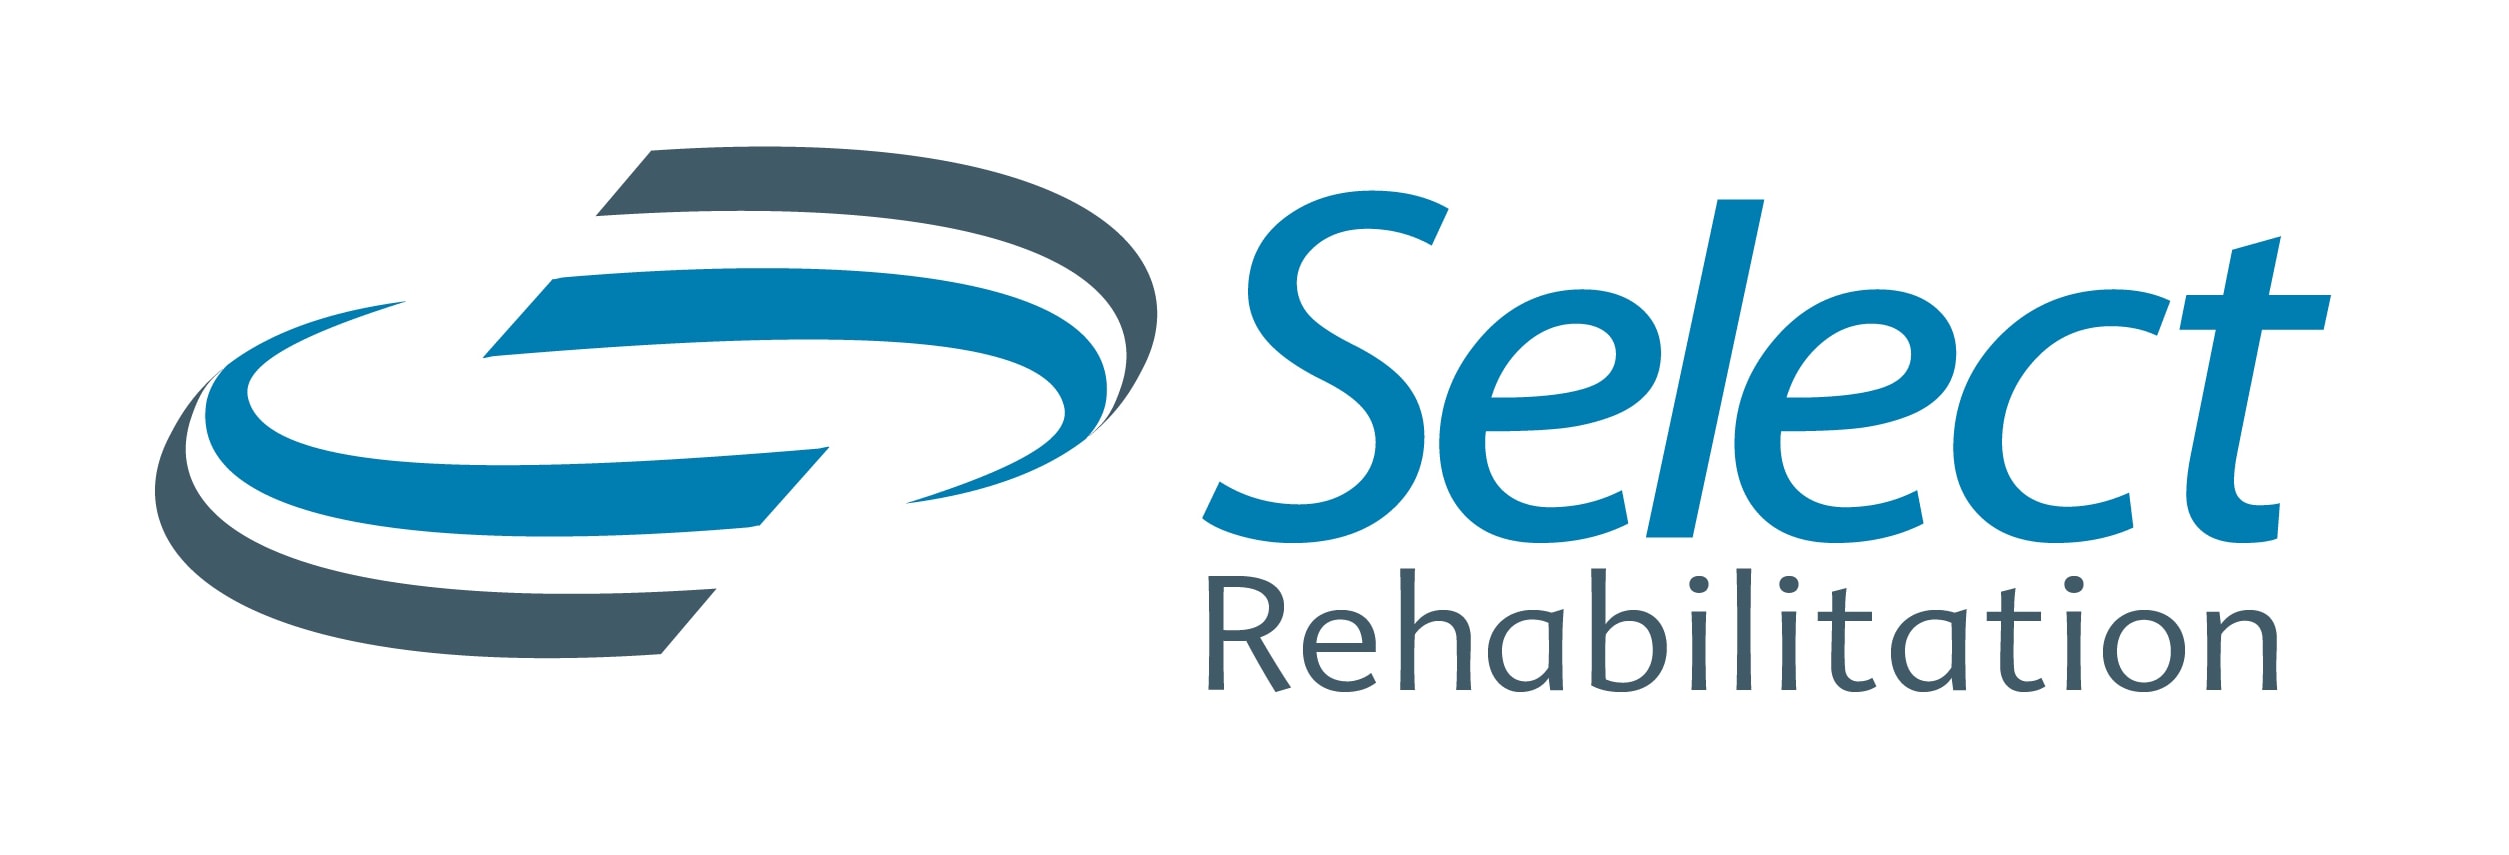 Select Rehabilitation 